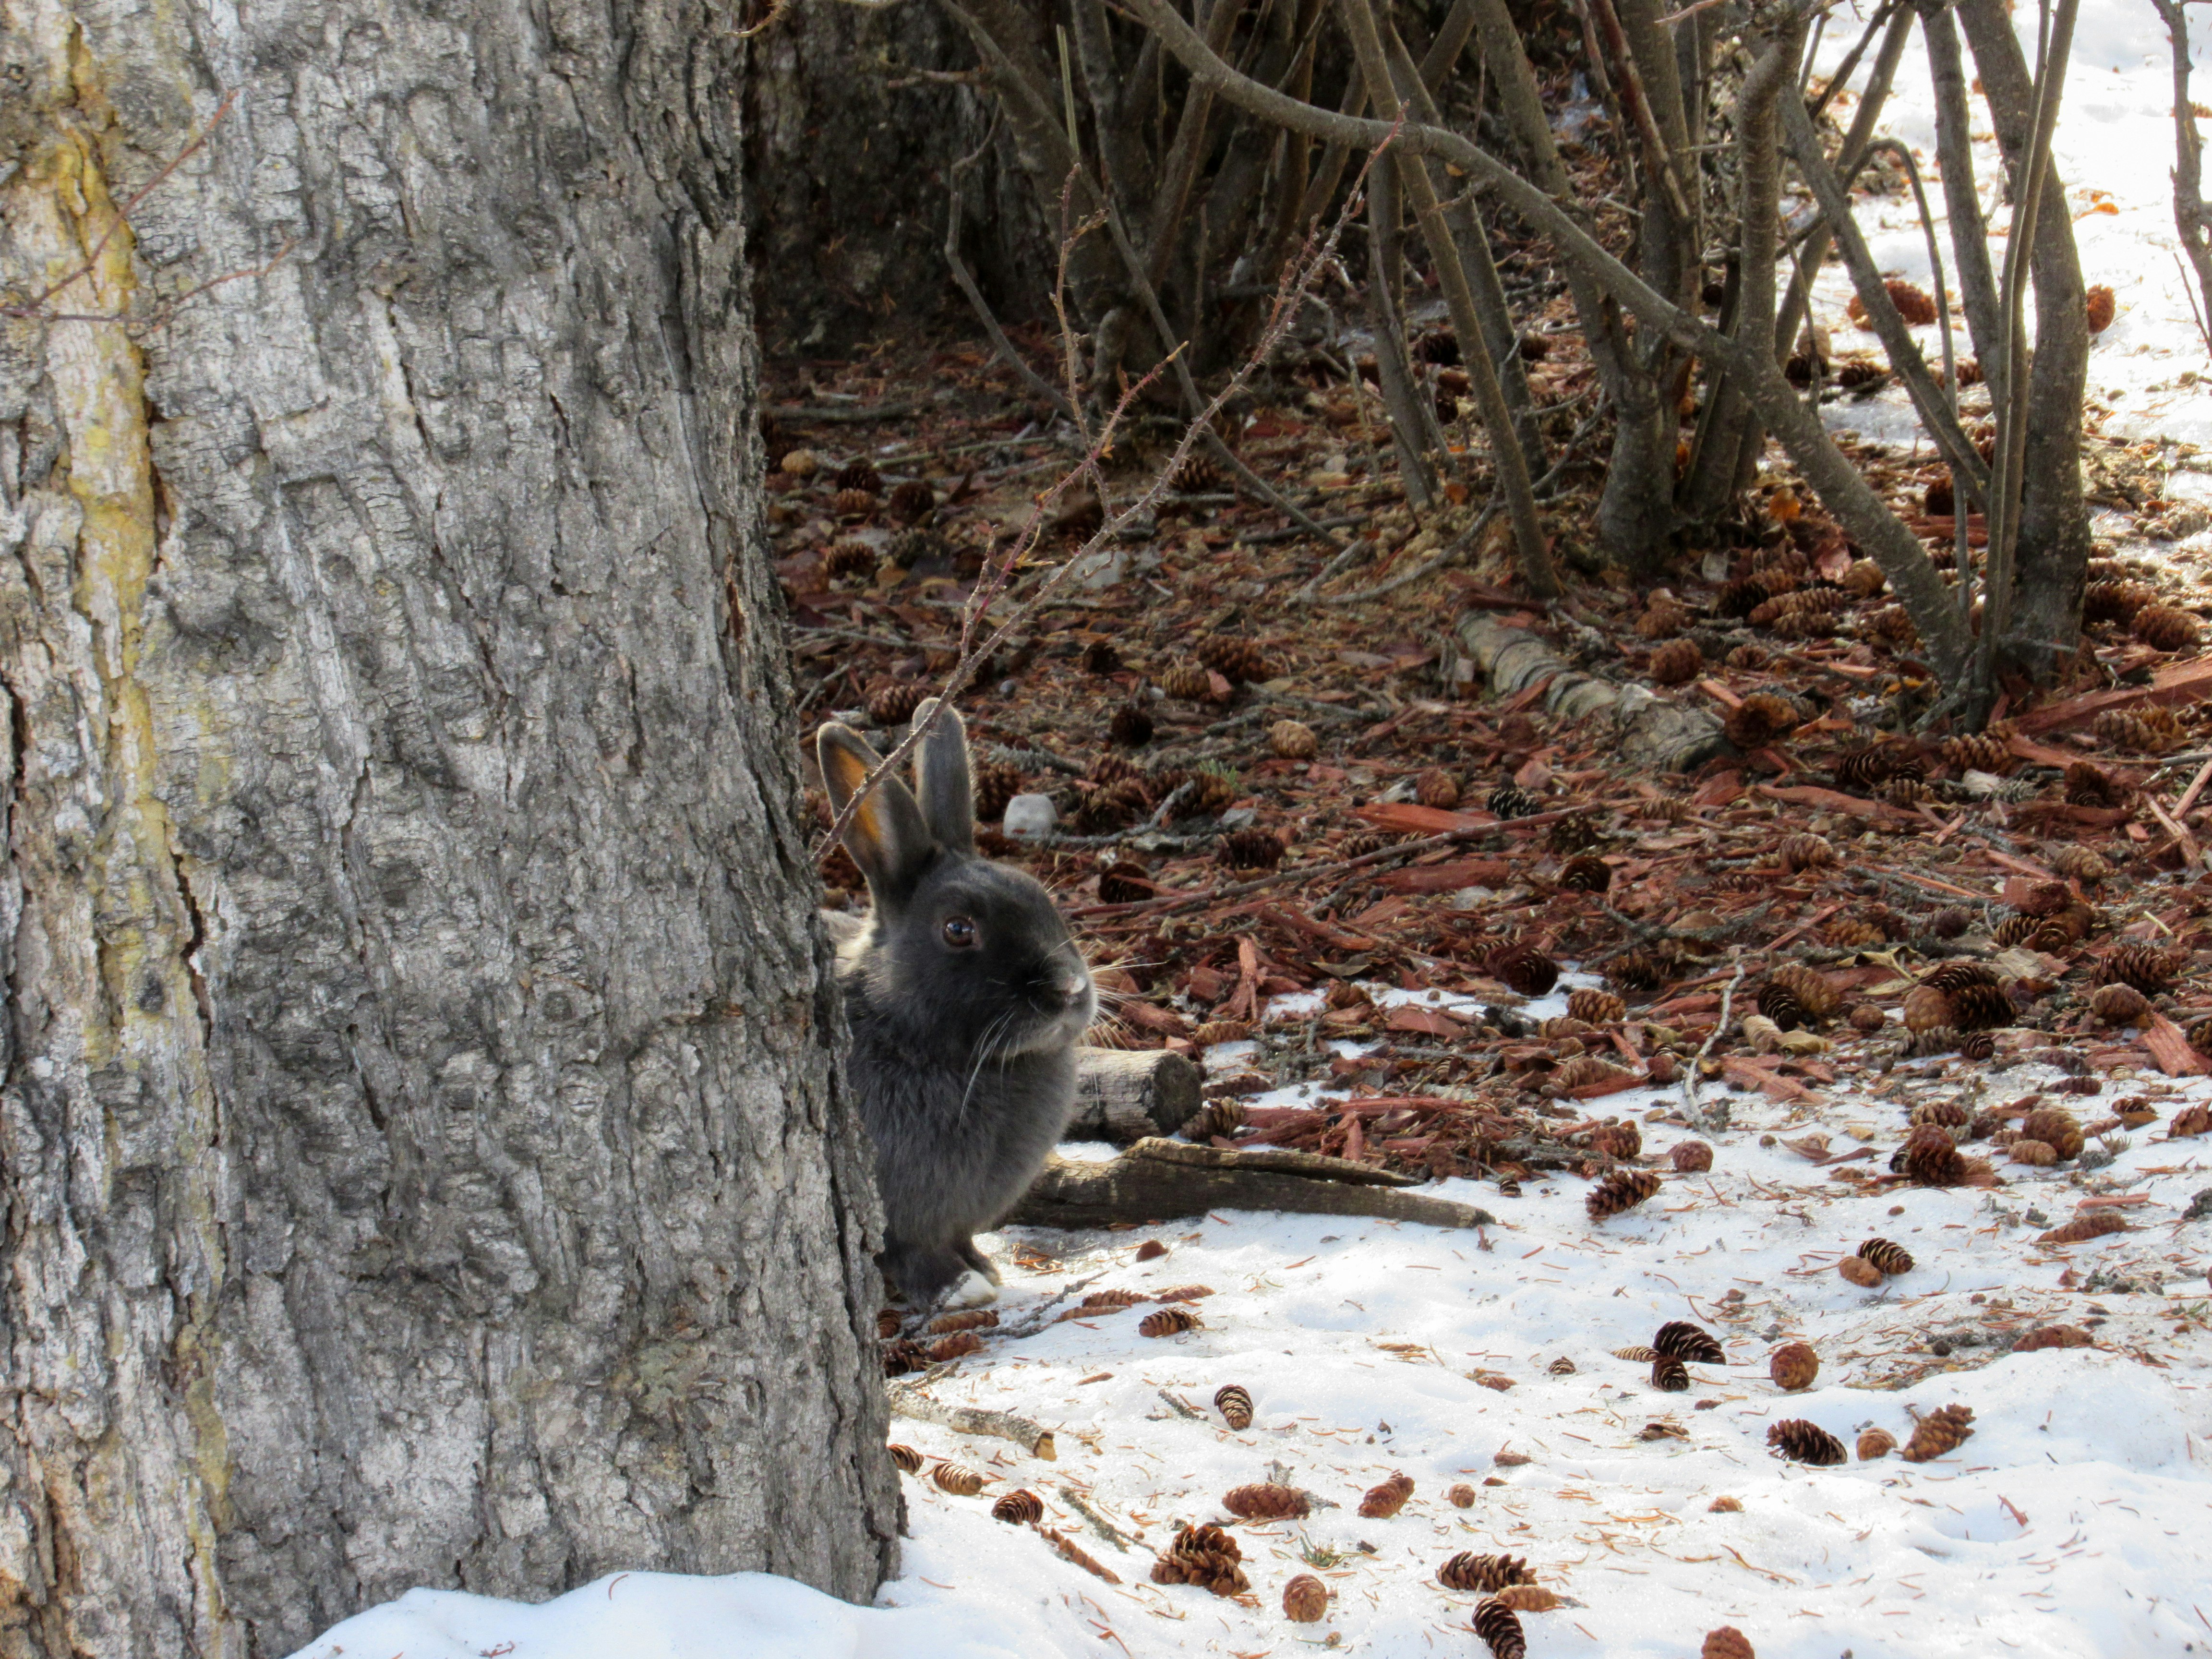 A rabbit hiding behind a tree